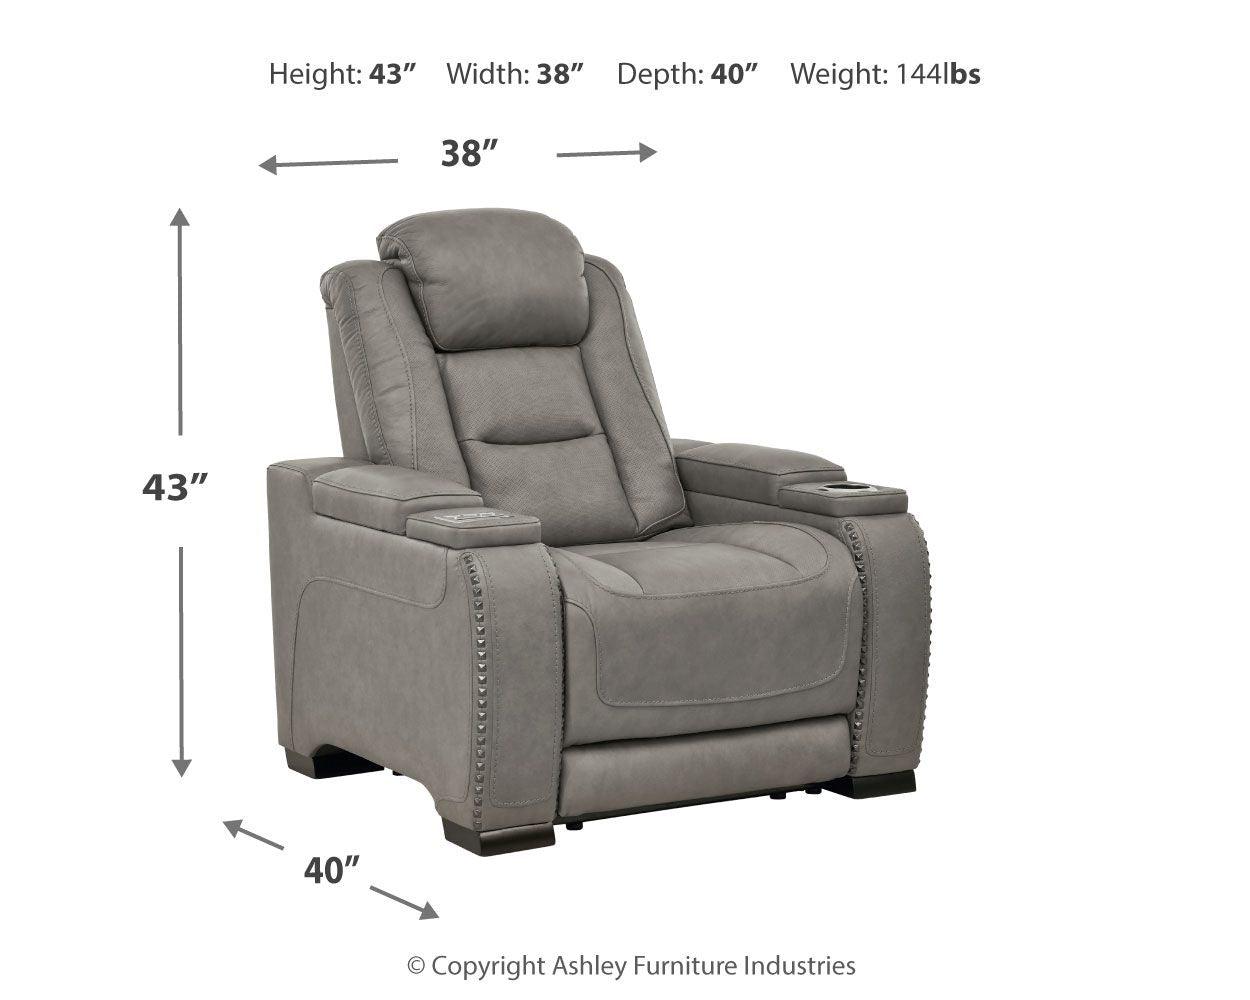 Ashley Furniture - The Man-Den - Power Recliner - 5th Avenue Furniture